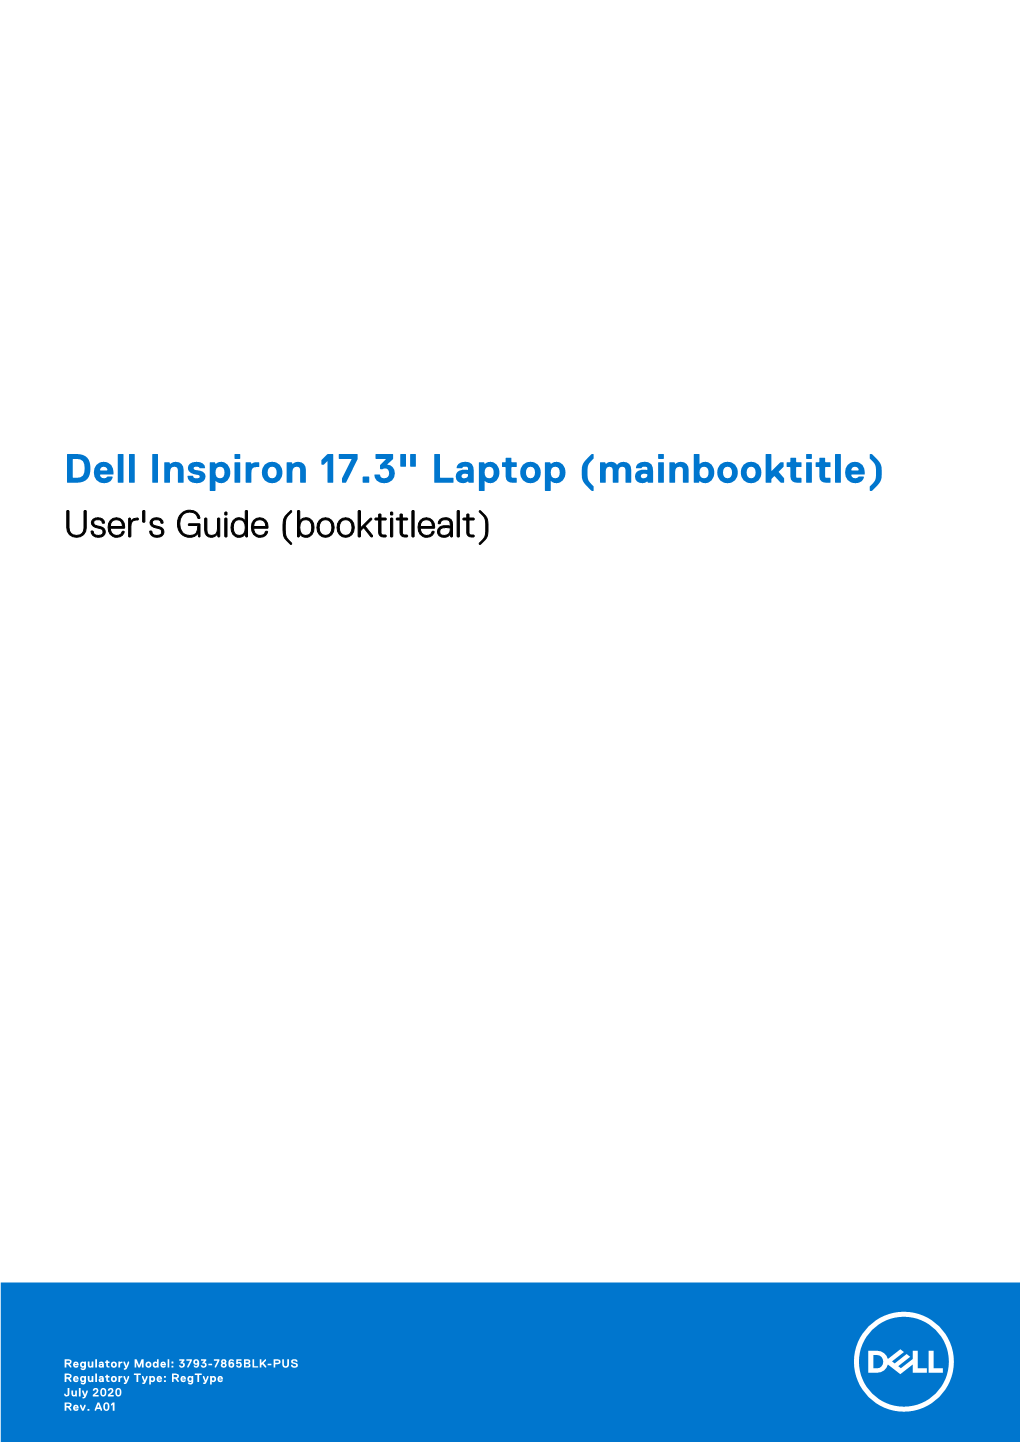 Dell Inspiron 17.3" Laptop (Mainbooktitle) User's Guide (Booktitlealt)